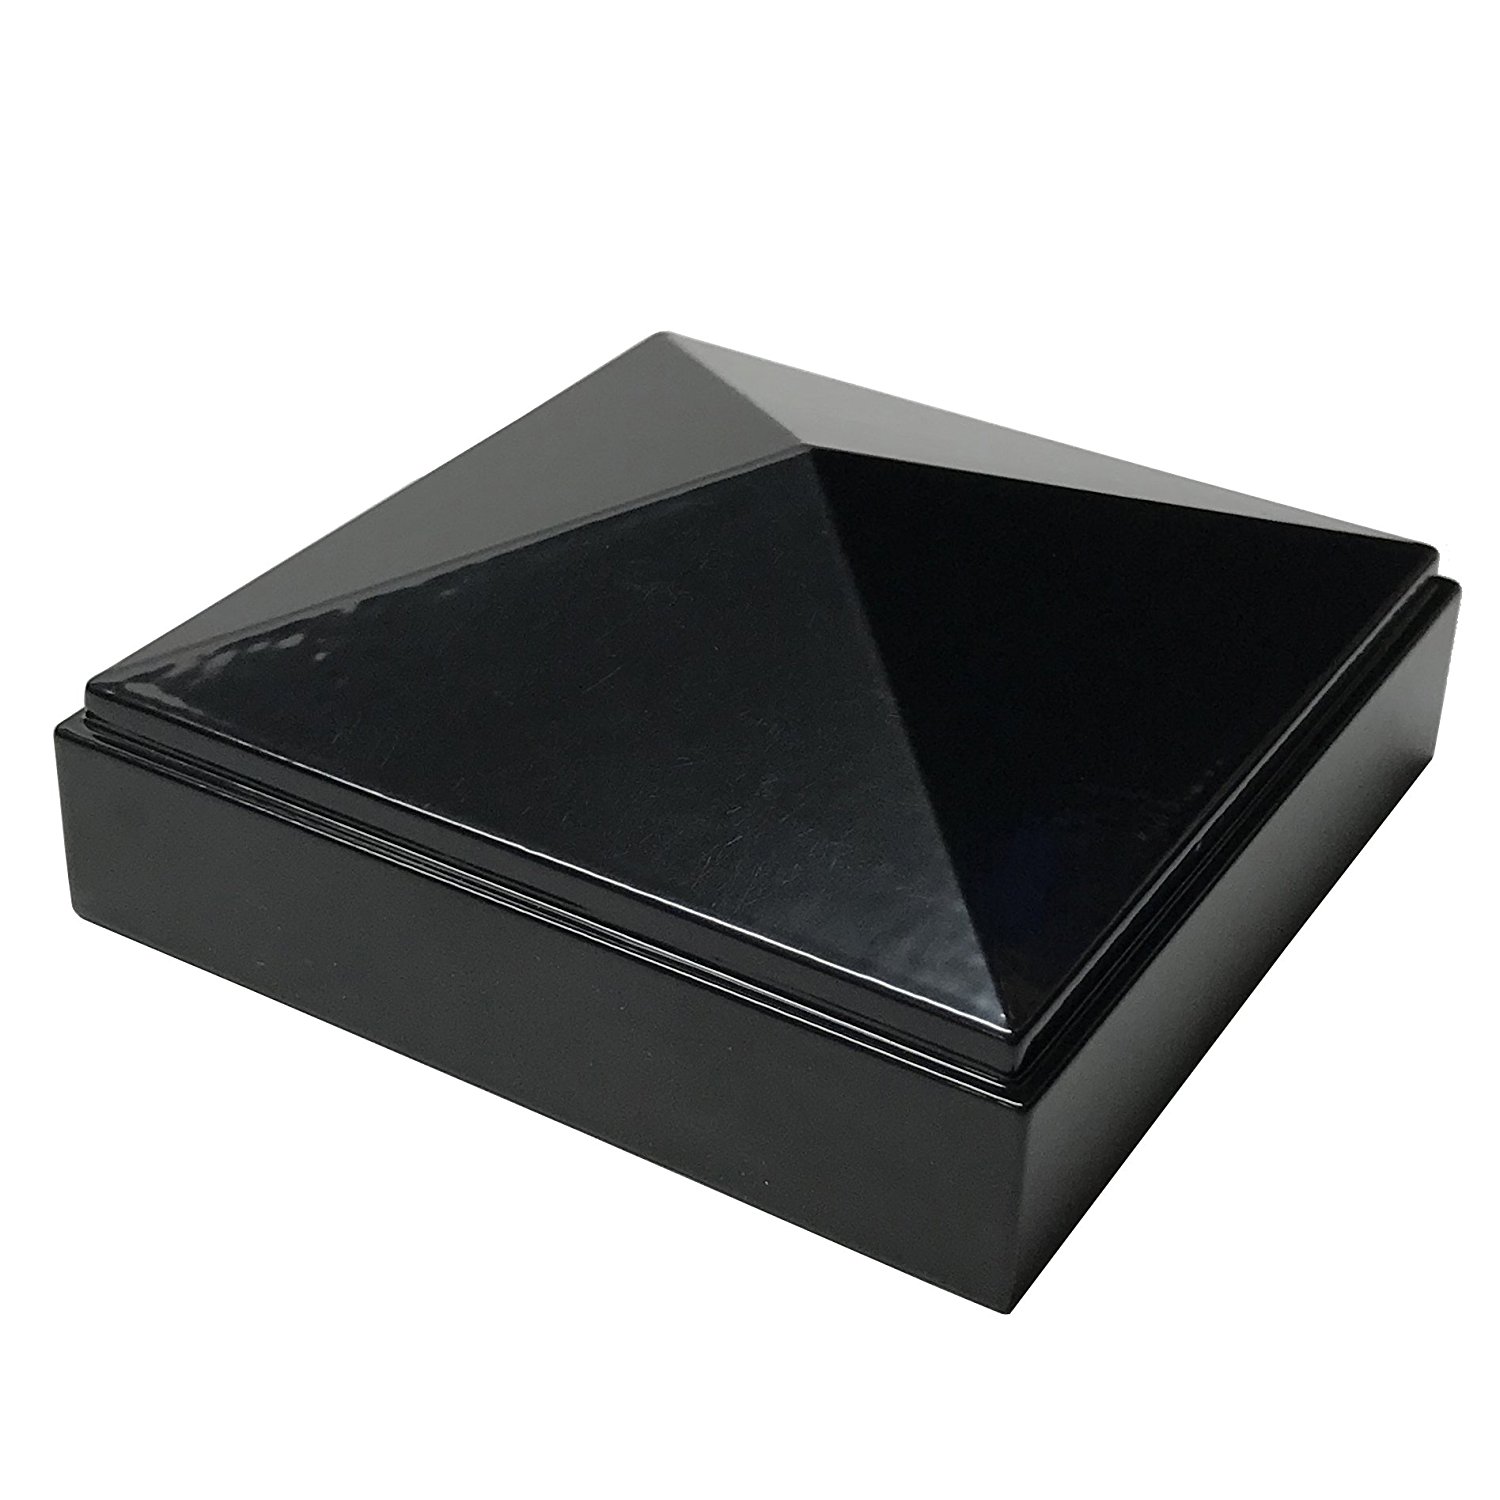 Decorex Hardware Aluminium Pyramid 3" x 3" Post Cap for 3" x 3" Metal Posts - Pressure Fit - Black